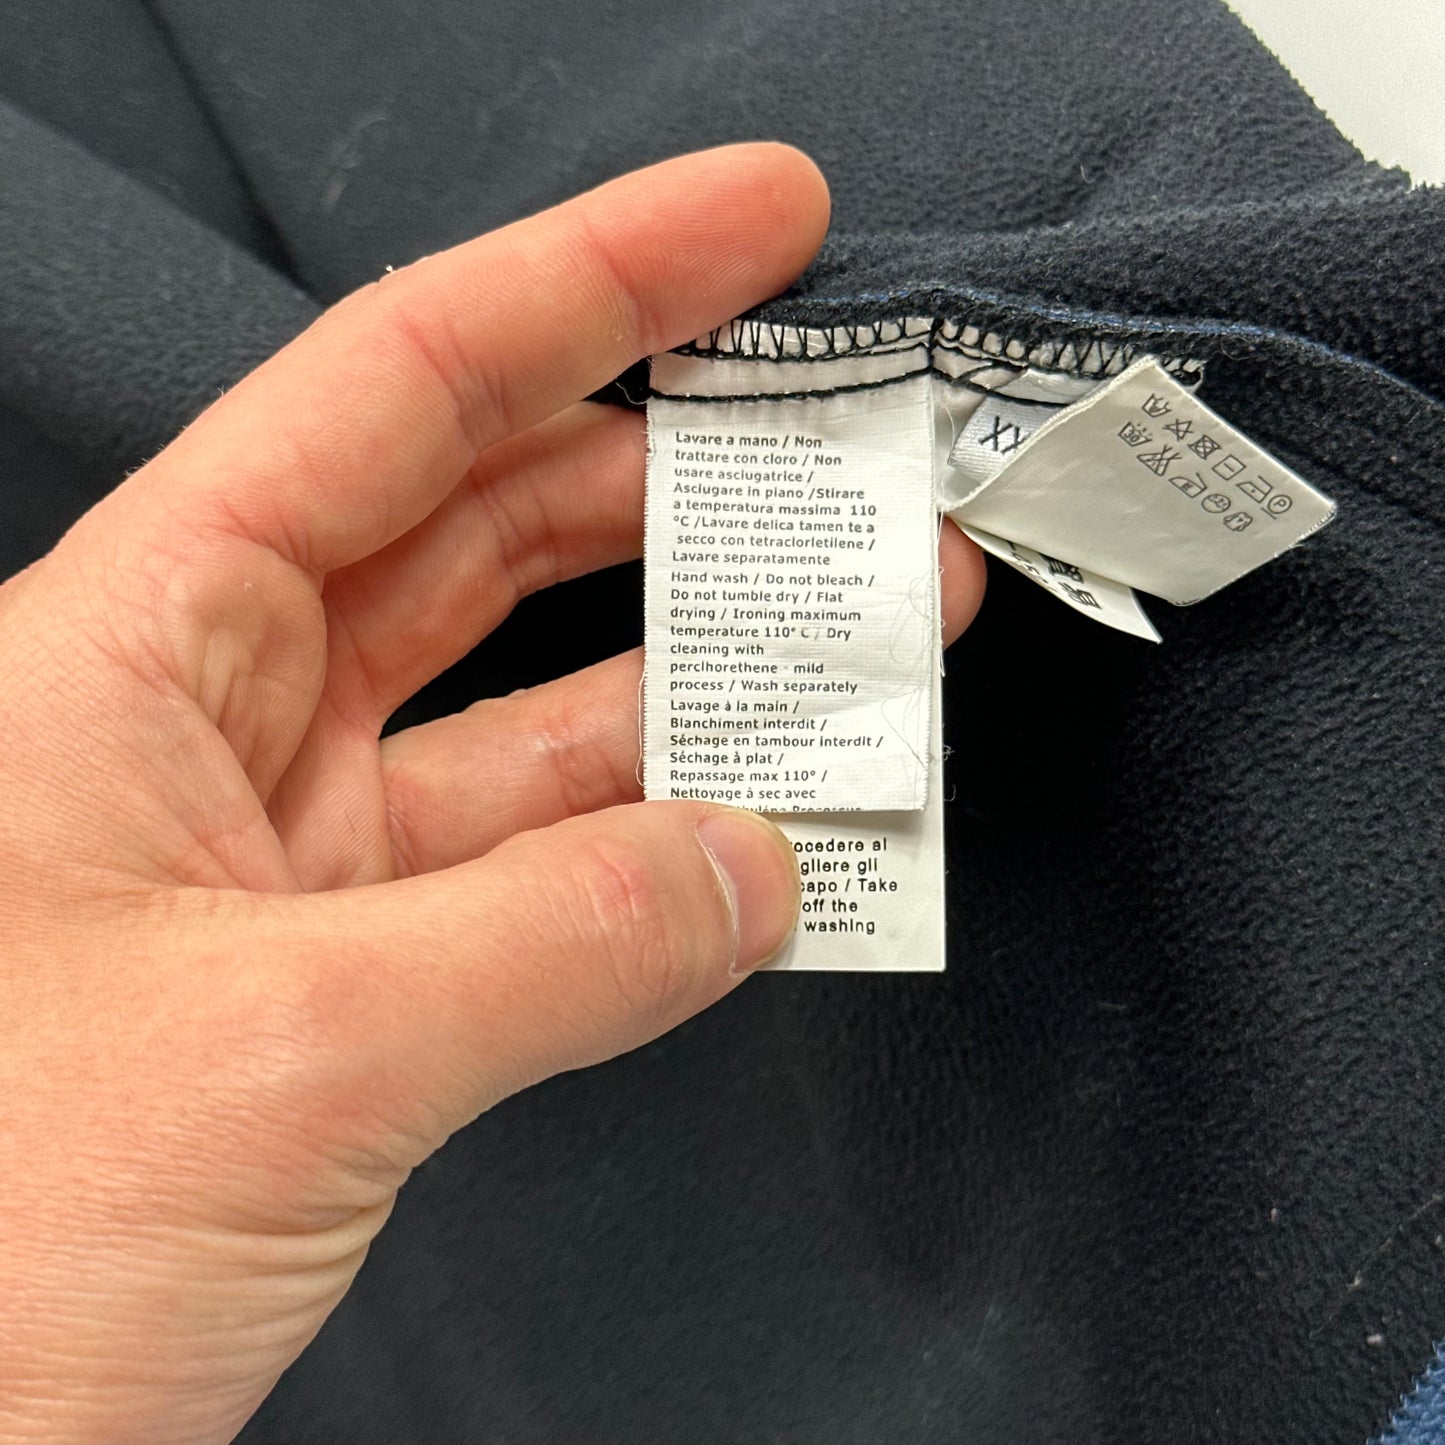 CP Company Scuba Fleece Lined Soft Shell Goggle Jacket - XL